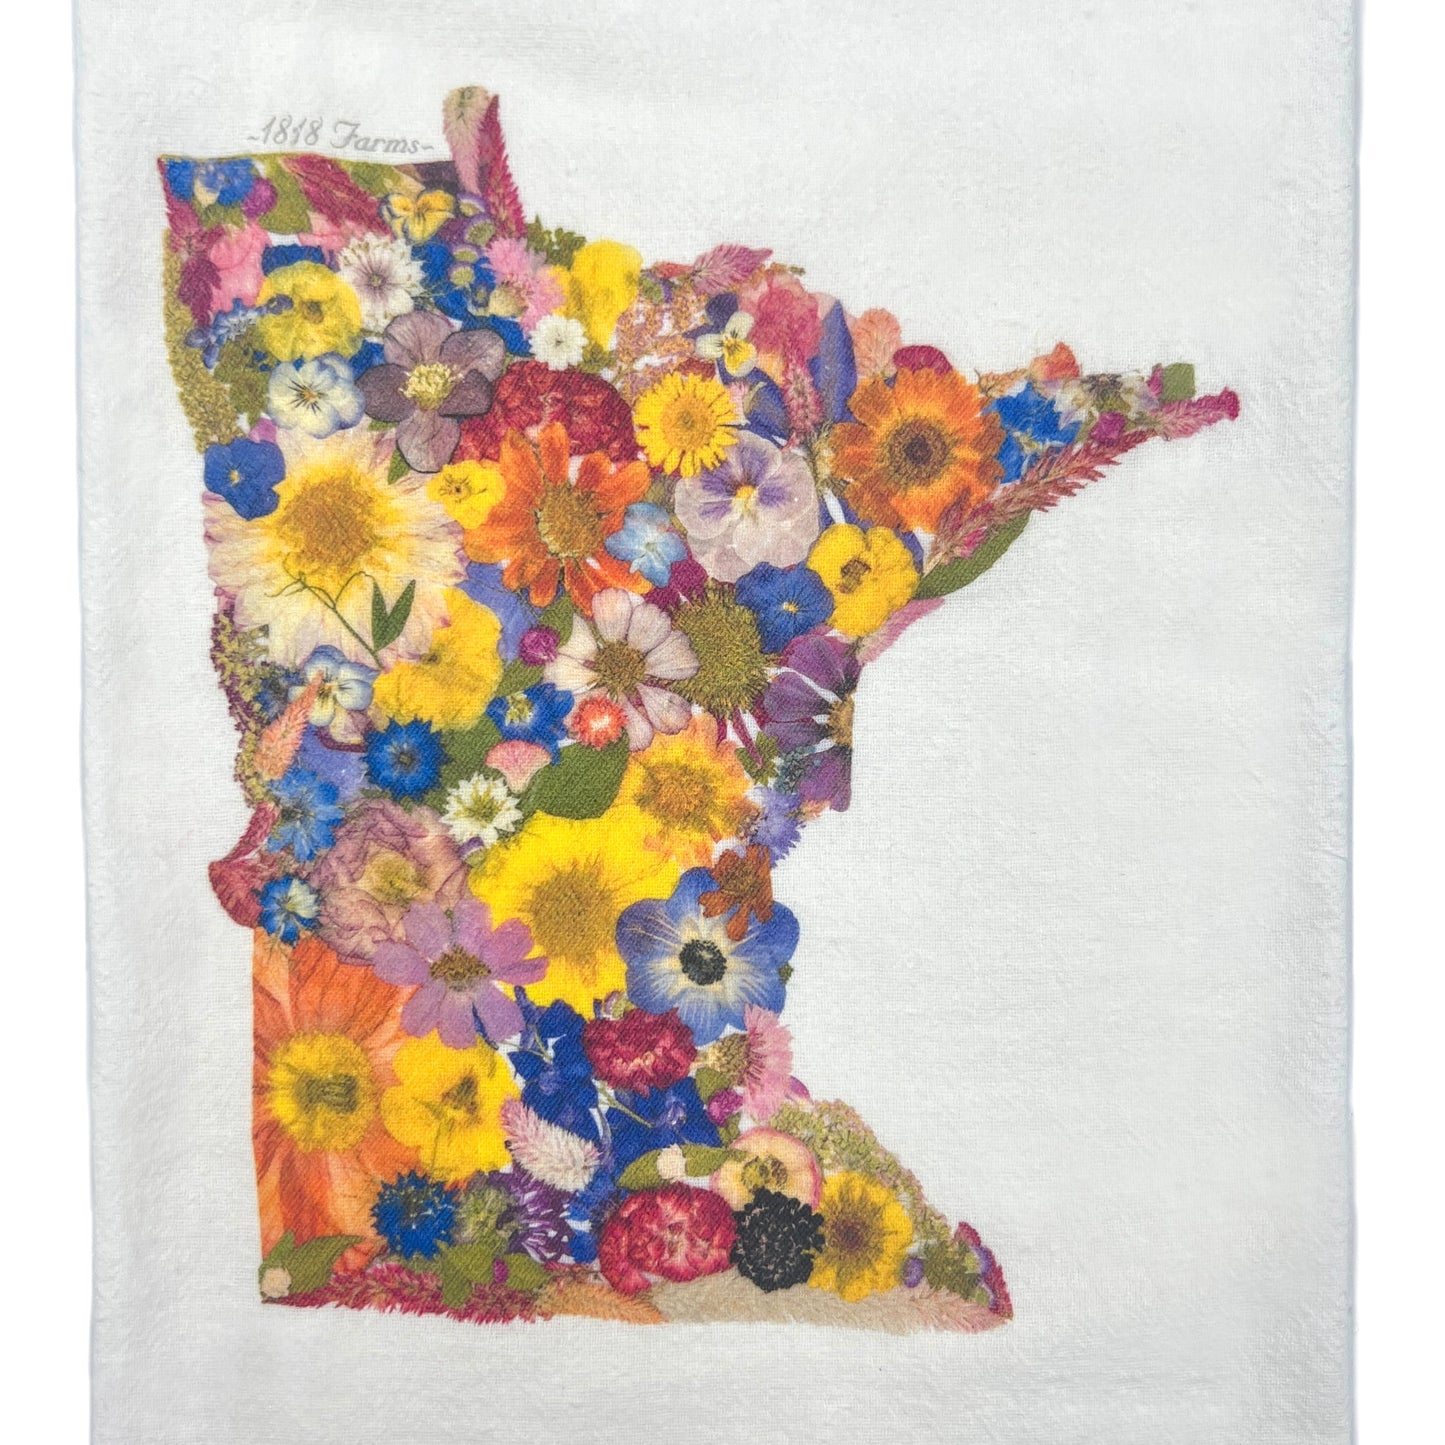 Minnesota Themed Flour Sack Towel  - "Where I Bloom" Collection Towel 1818 Farms   